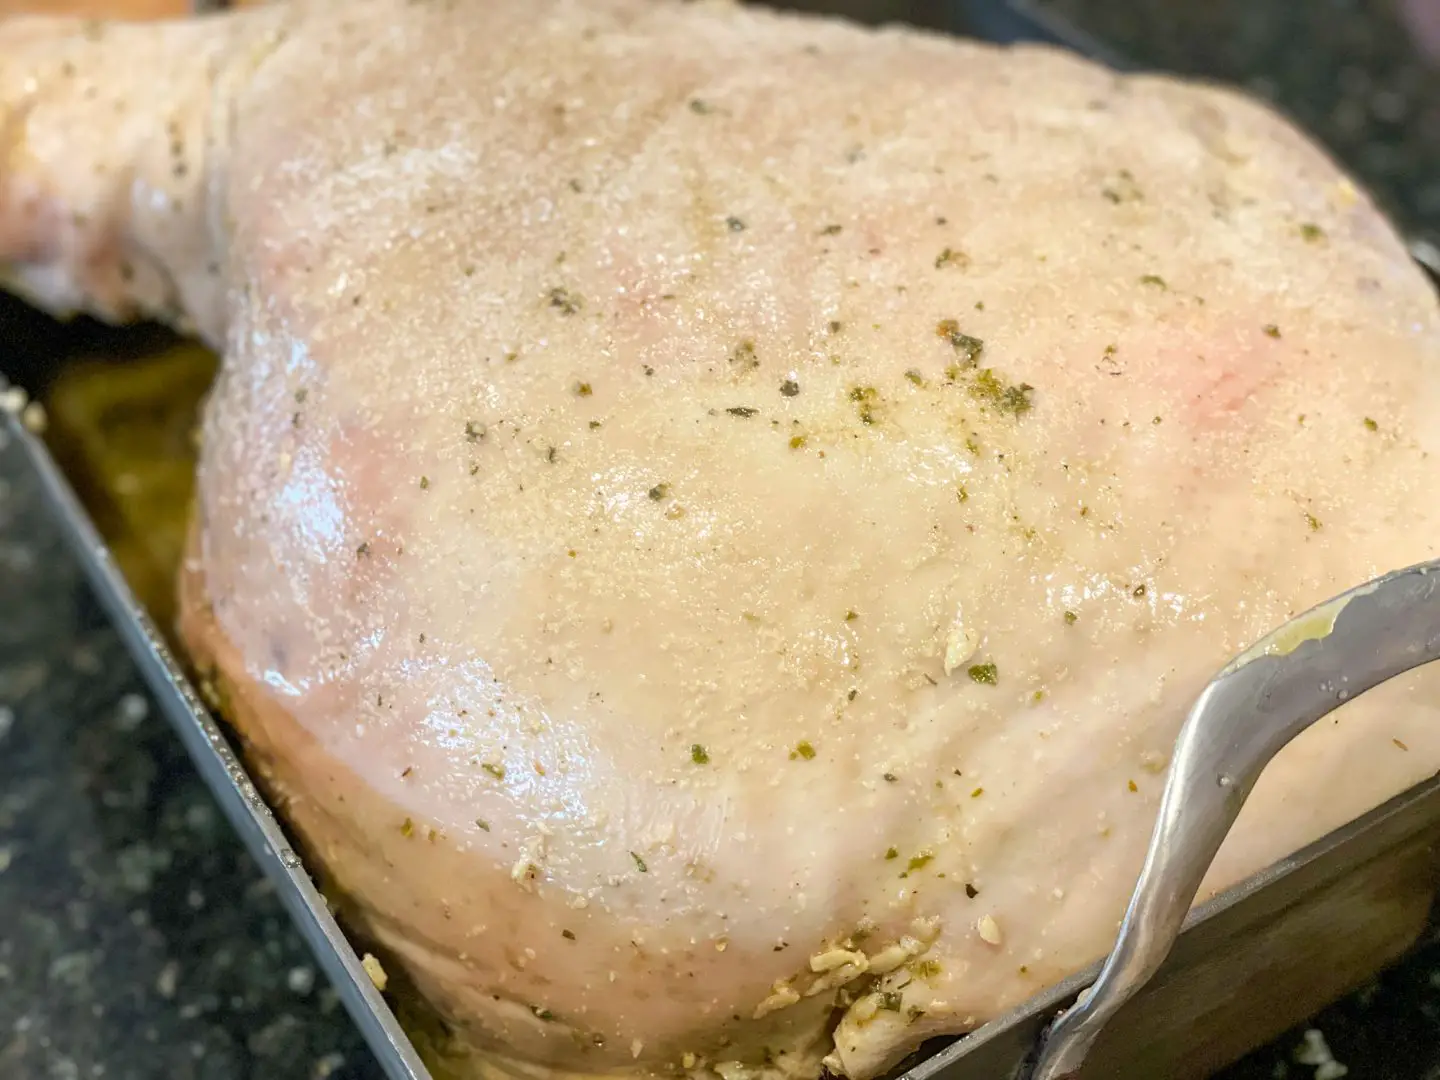 Begin roasting pork leg uncovered at 425* for 30 minutes.